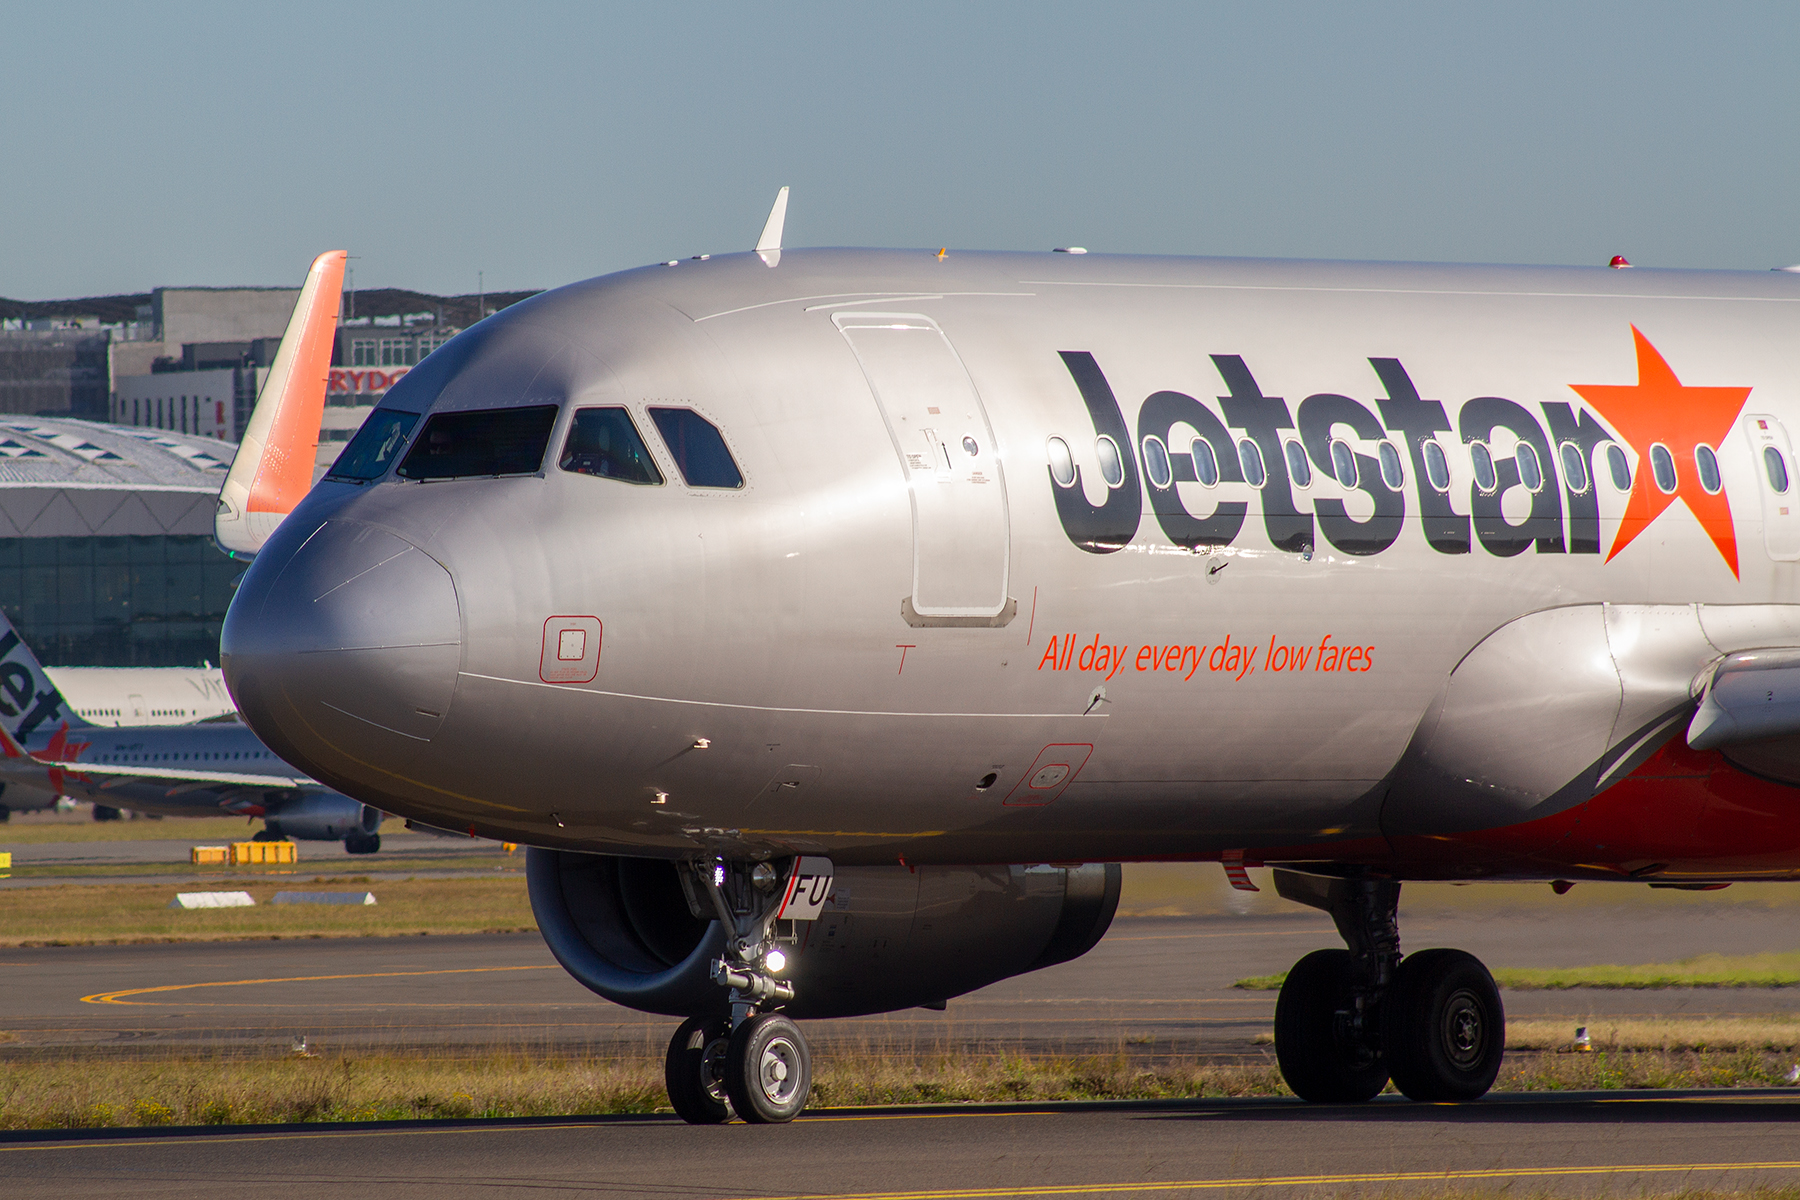 Jetstar Airways Airbus A320-200 VH-VFU at Kingsford Smith